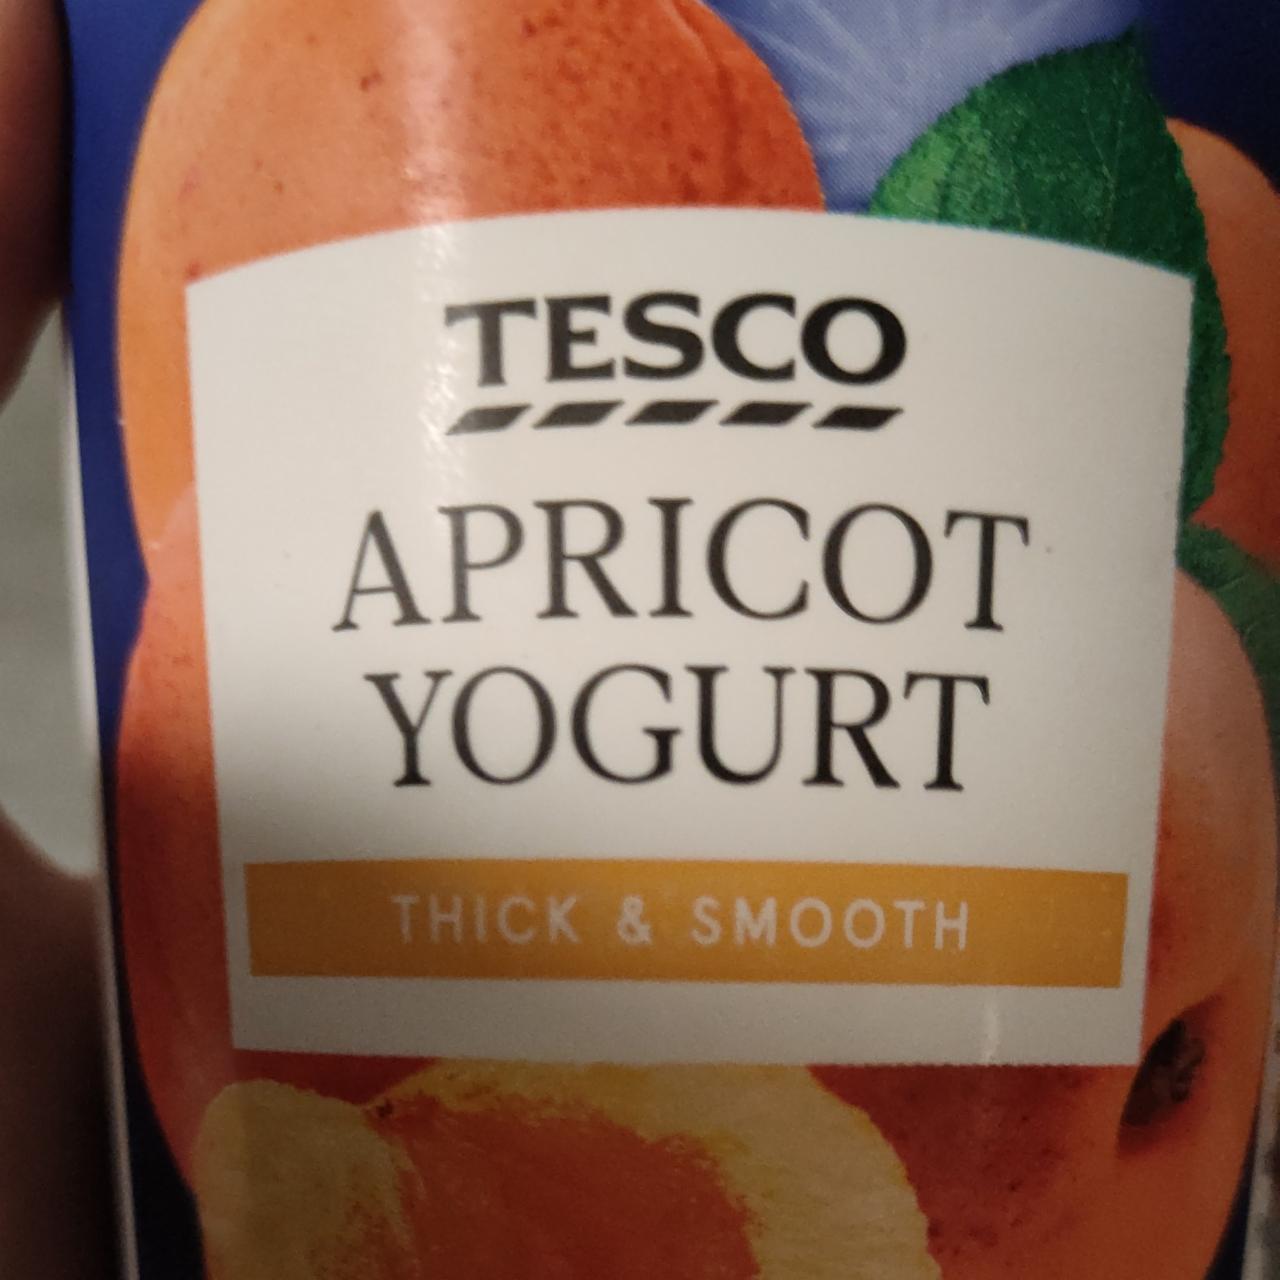 Fotografie - Meruňkový jogurt (Apricot Yogurt) Tesco